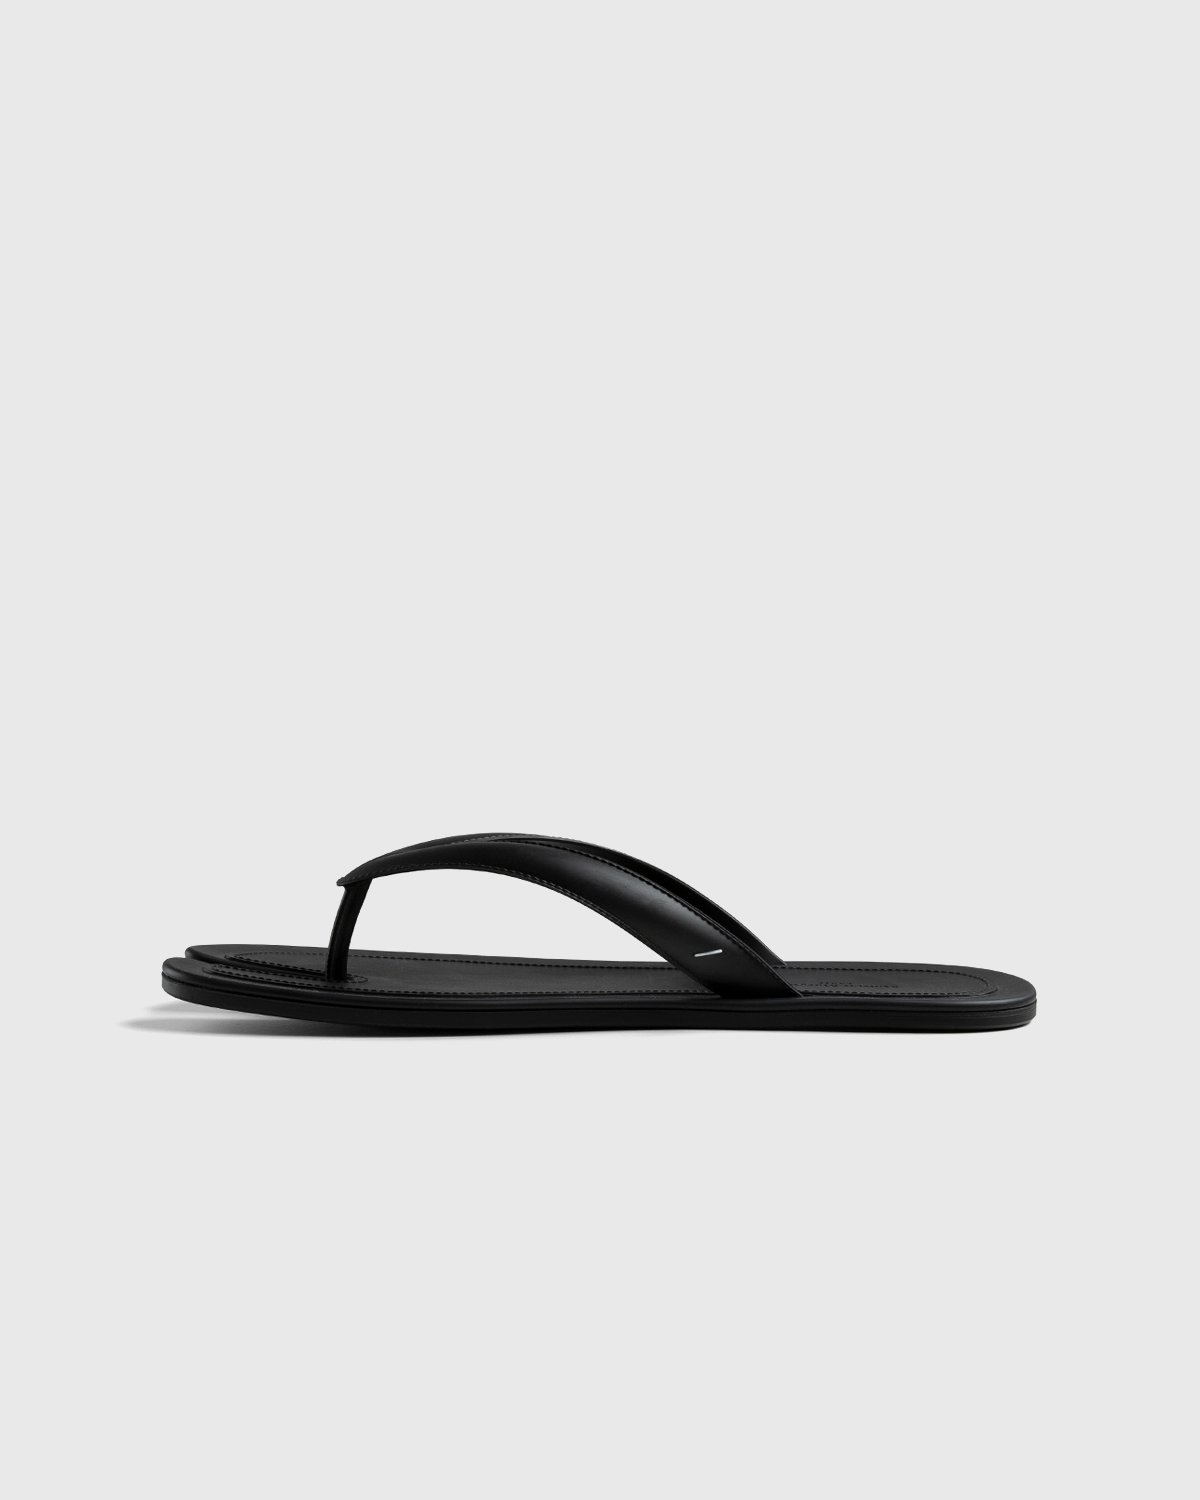 Maison Margiela - Tabi Flip-Flops Black - Footwear - Black - Image 3